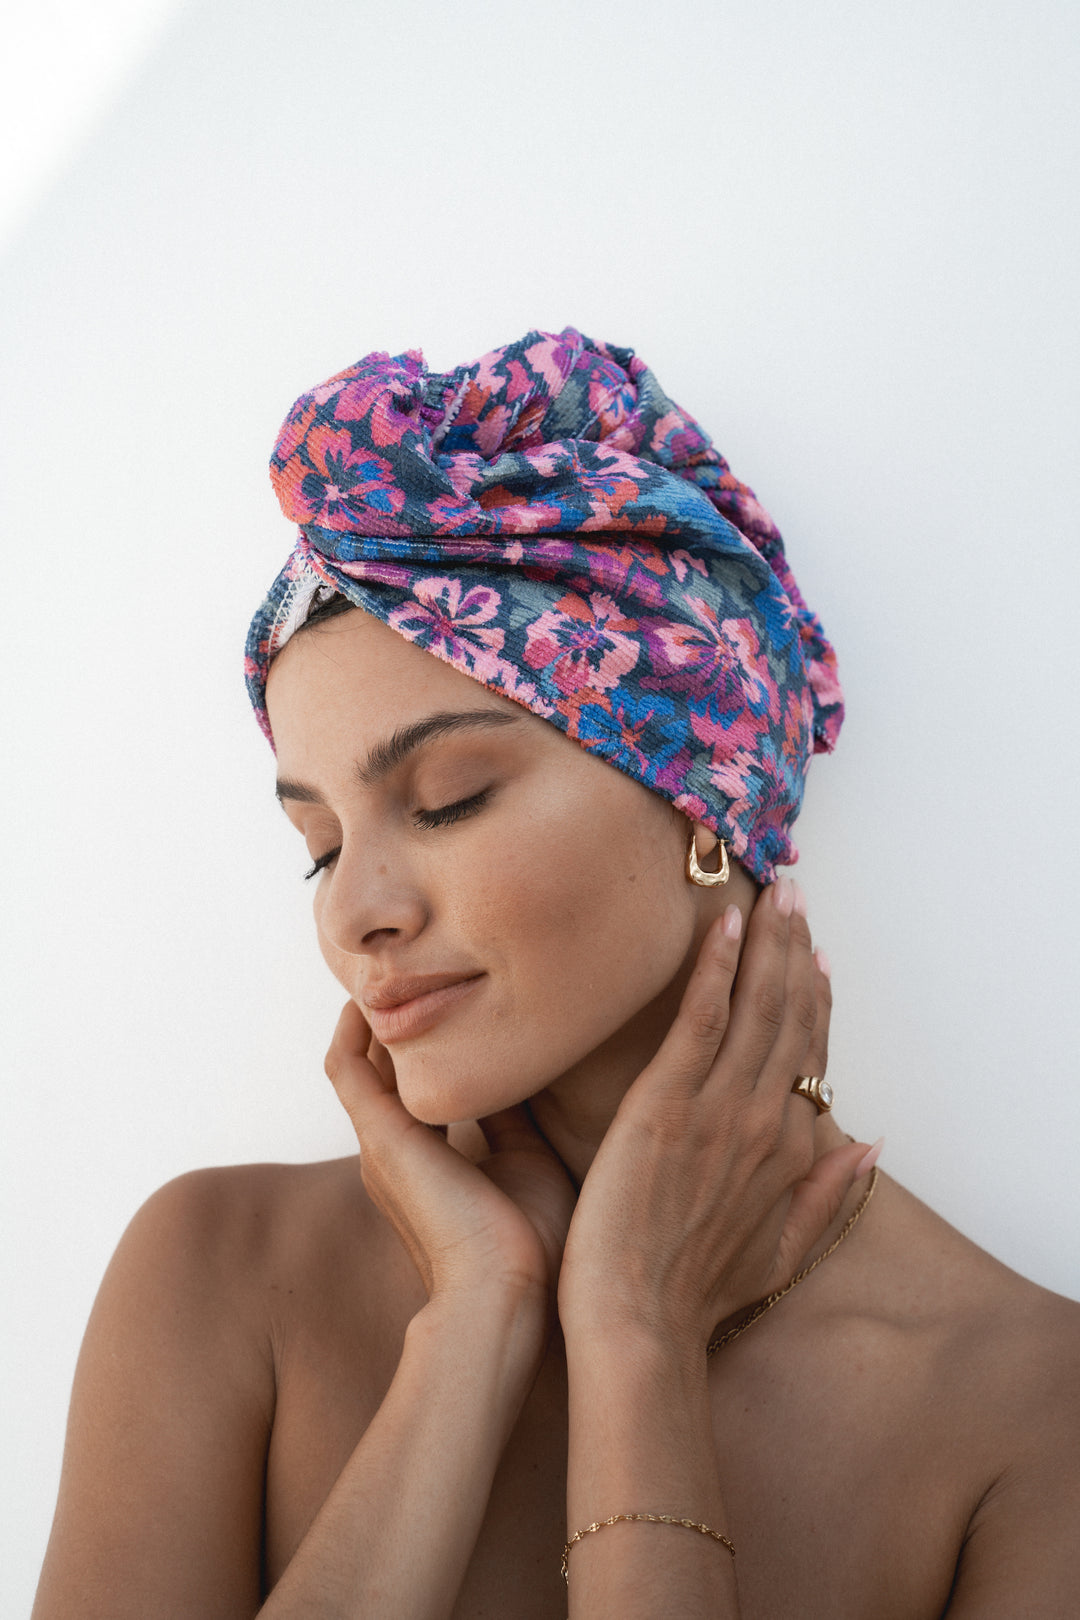 Louvelle | Riva Hair Towel Wrap I Secret Garden